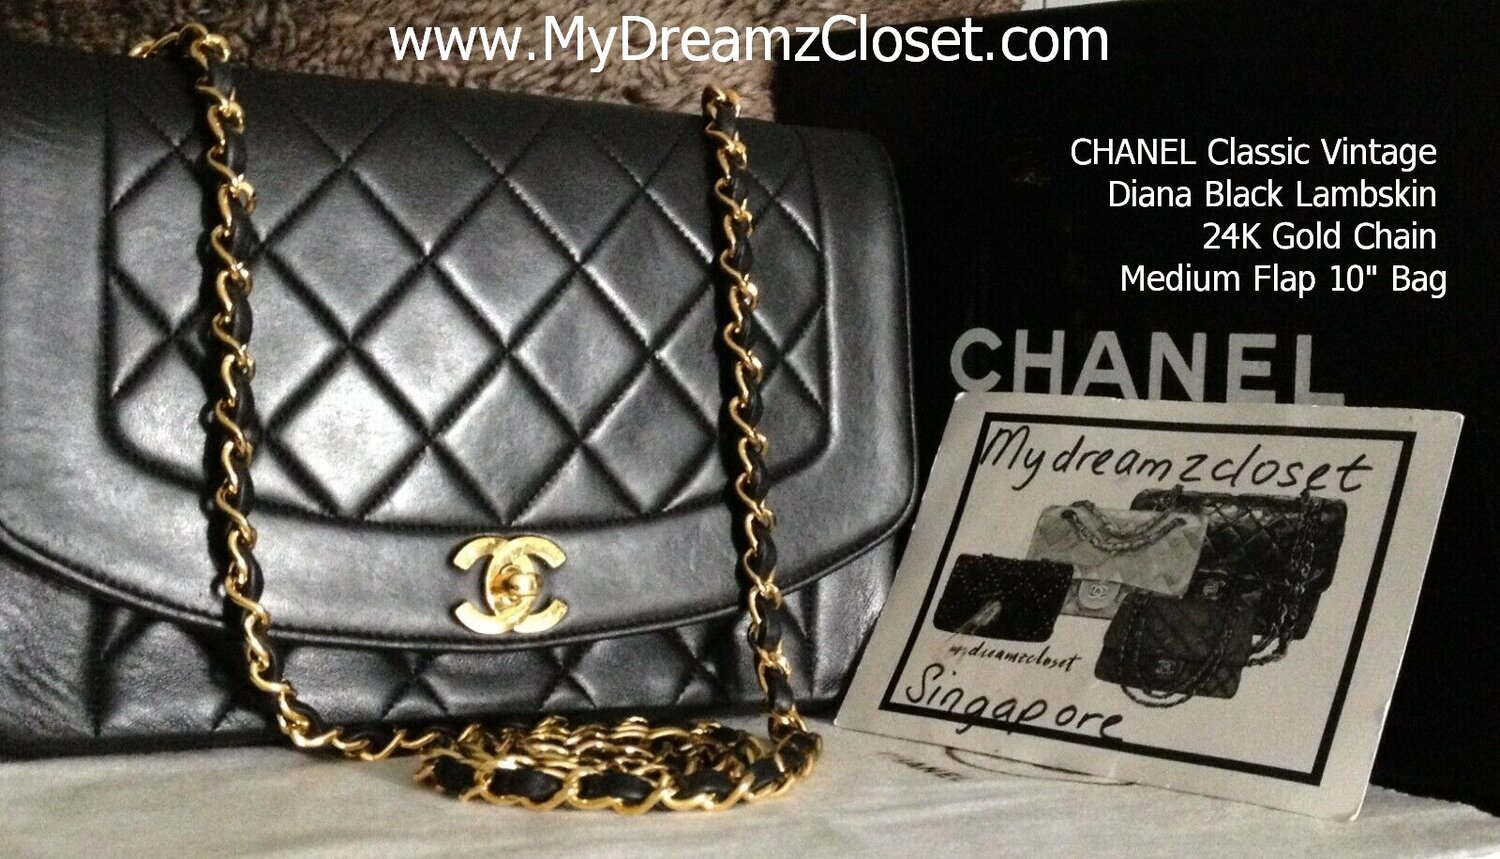 Chanel Vintage Classic Double 10 Med Flap Bag - ADL1536